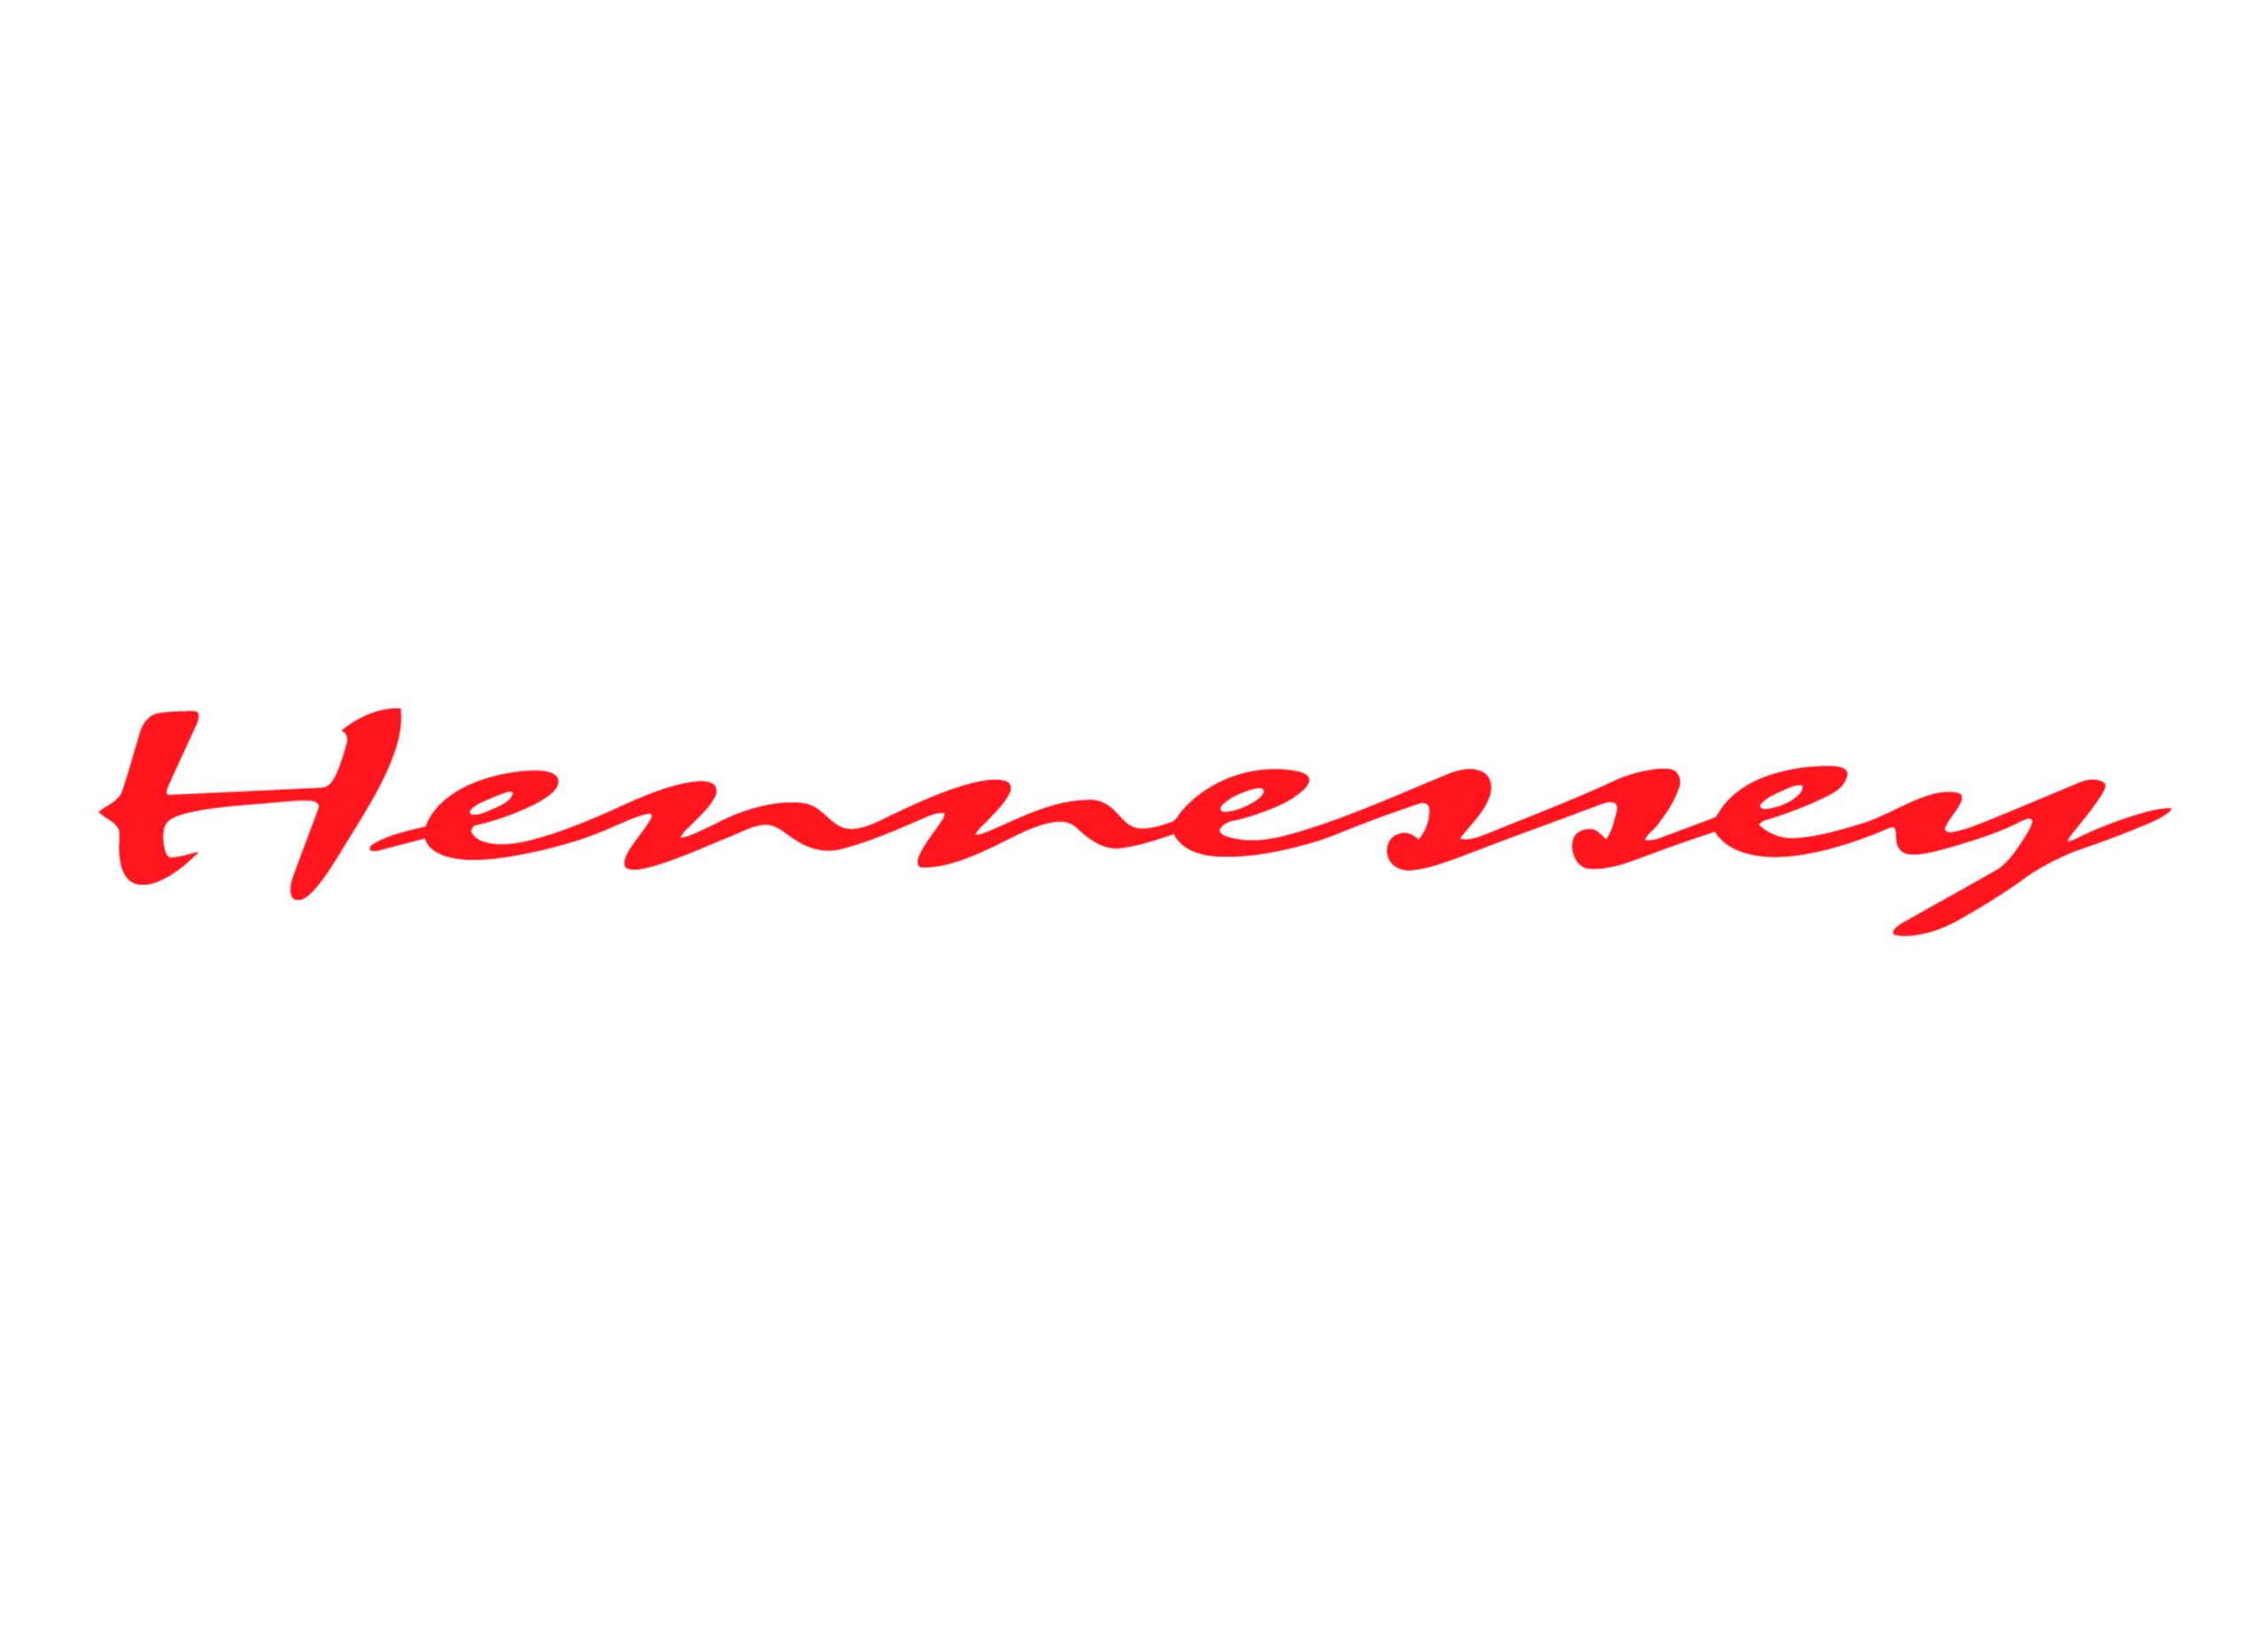 Hennessey logo 1991-present